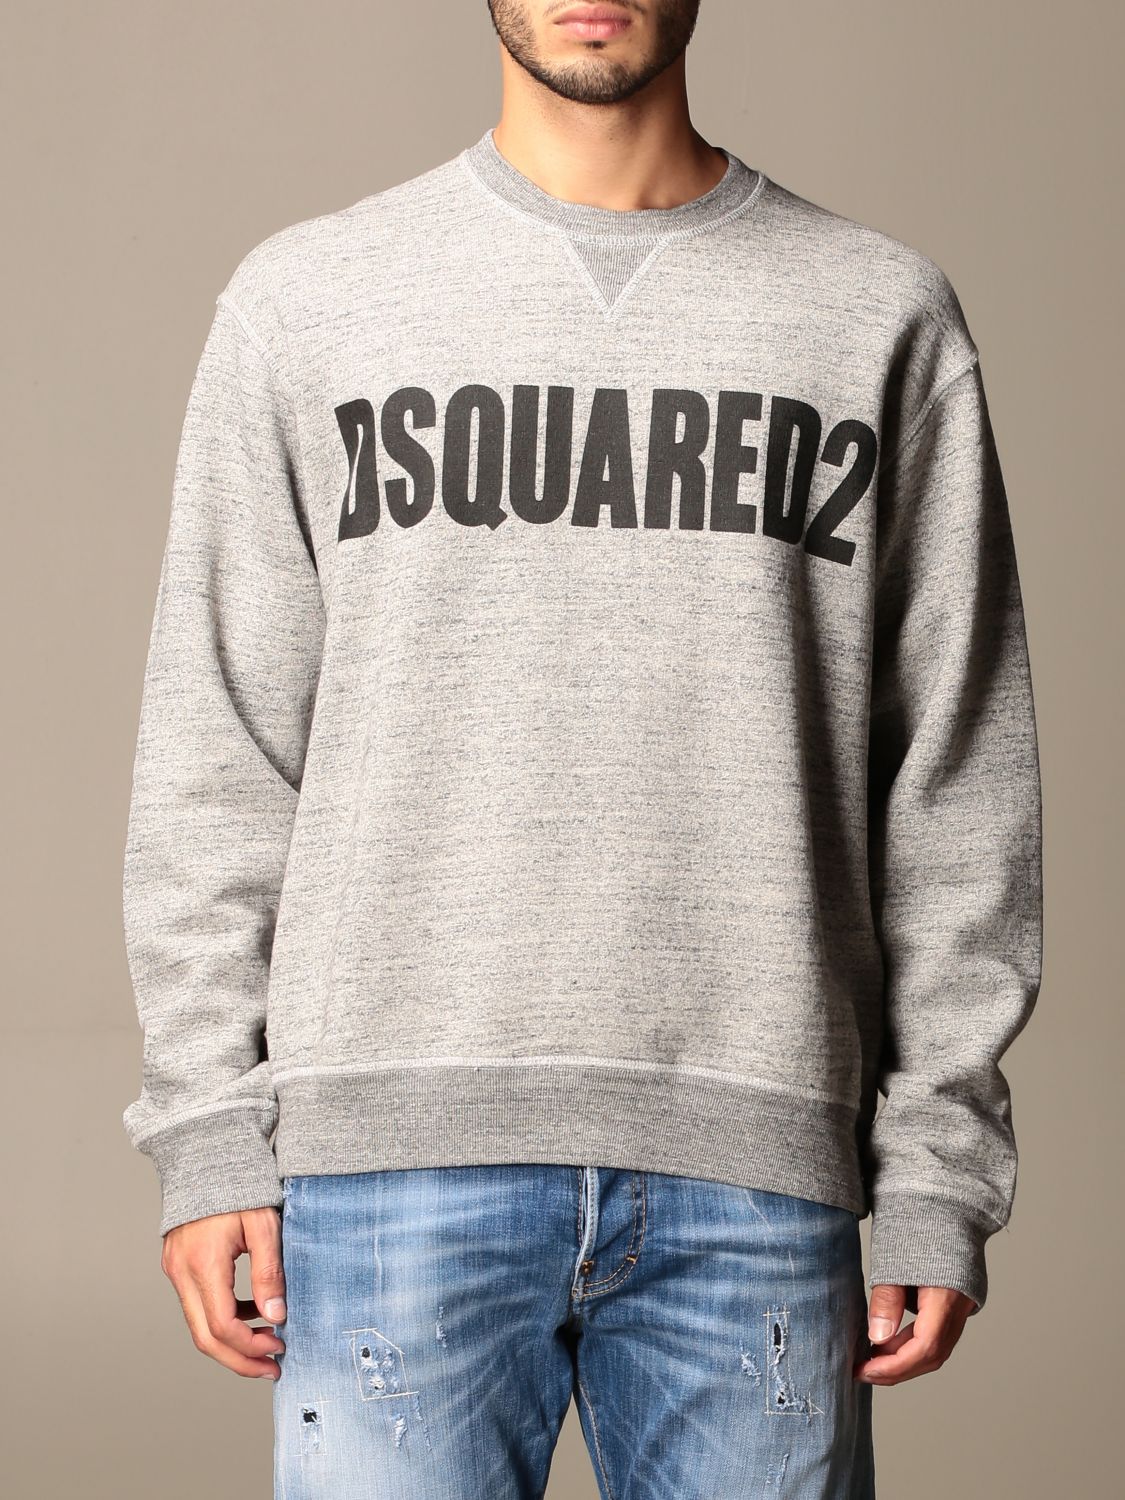 dsquared2 grey hoodie